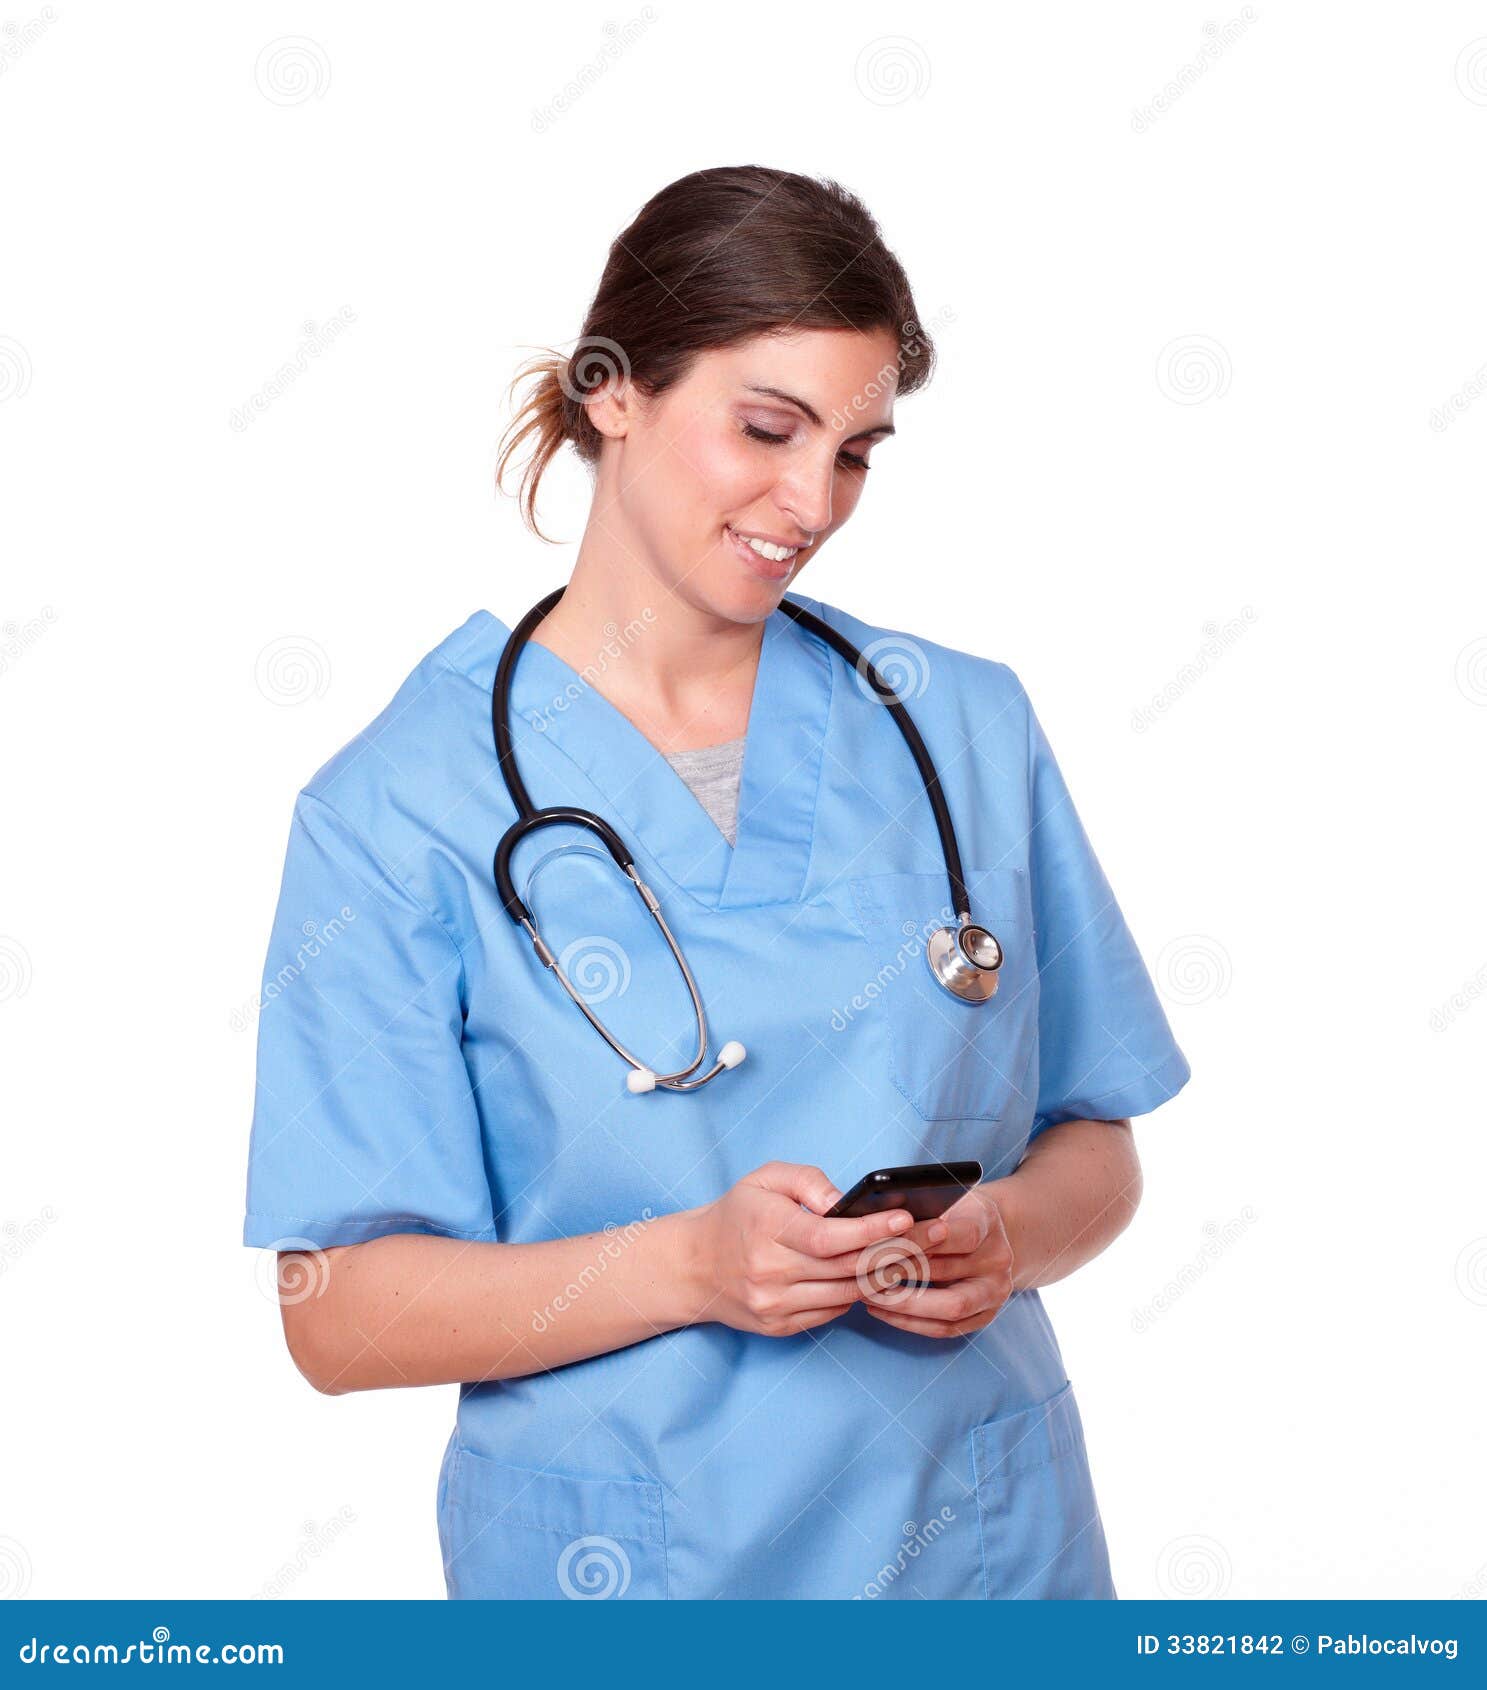 nurse on phone clipart - photo #22